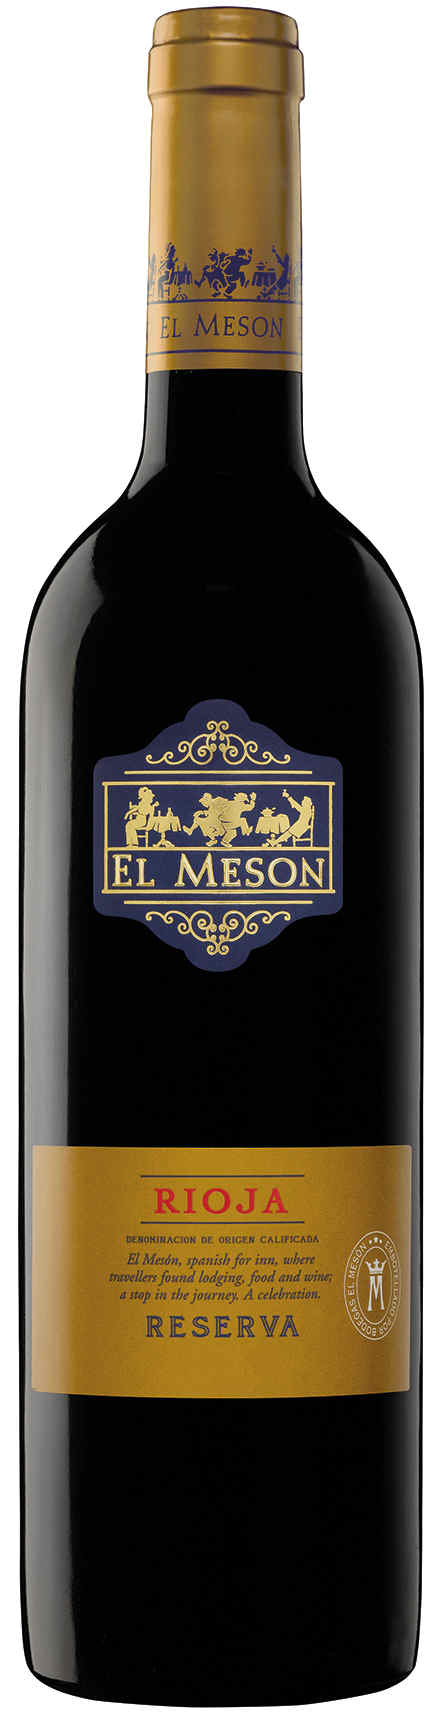 El Meson Rioja Reserva